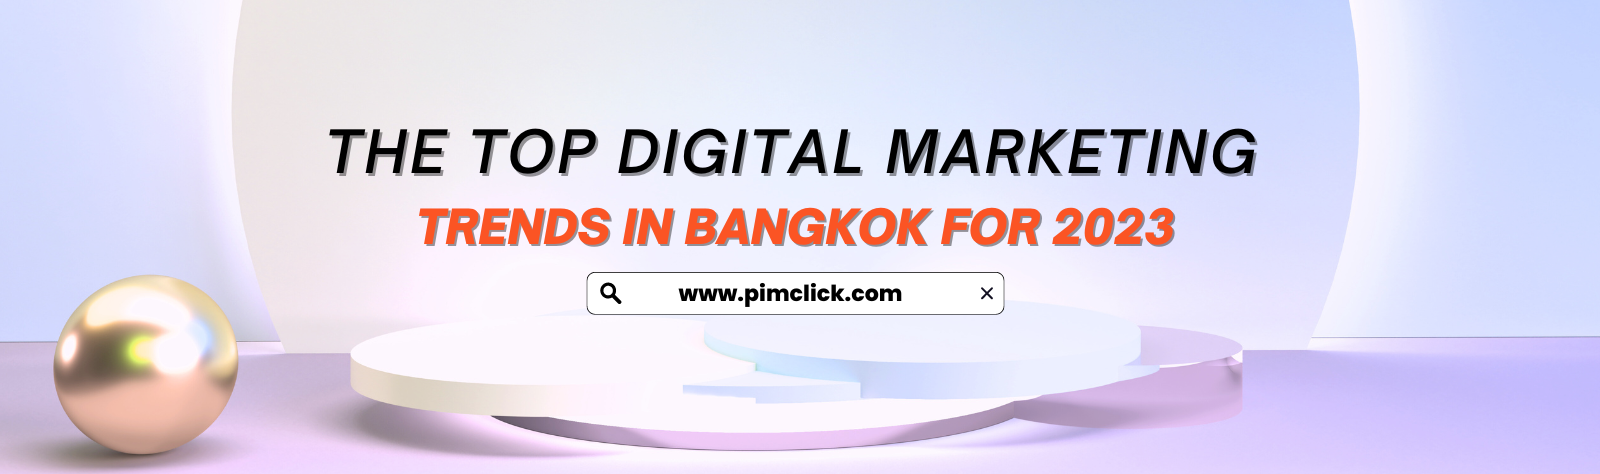 the-top-digital-marketing-trends-in-bangkok-for-2023